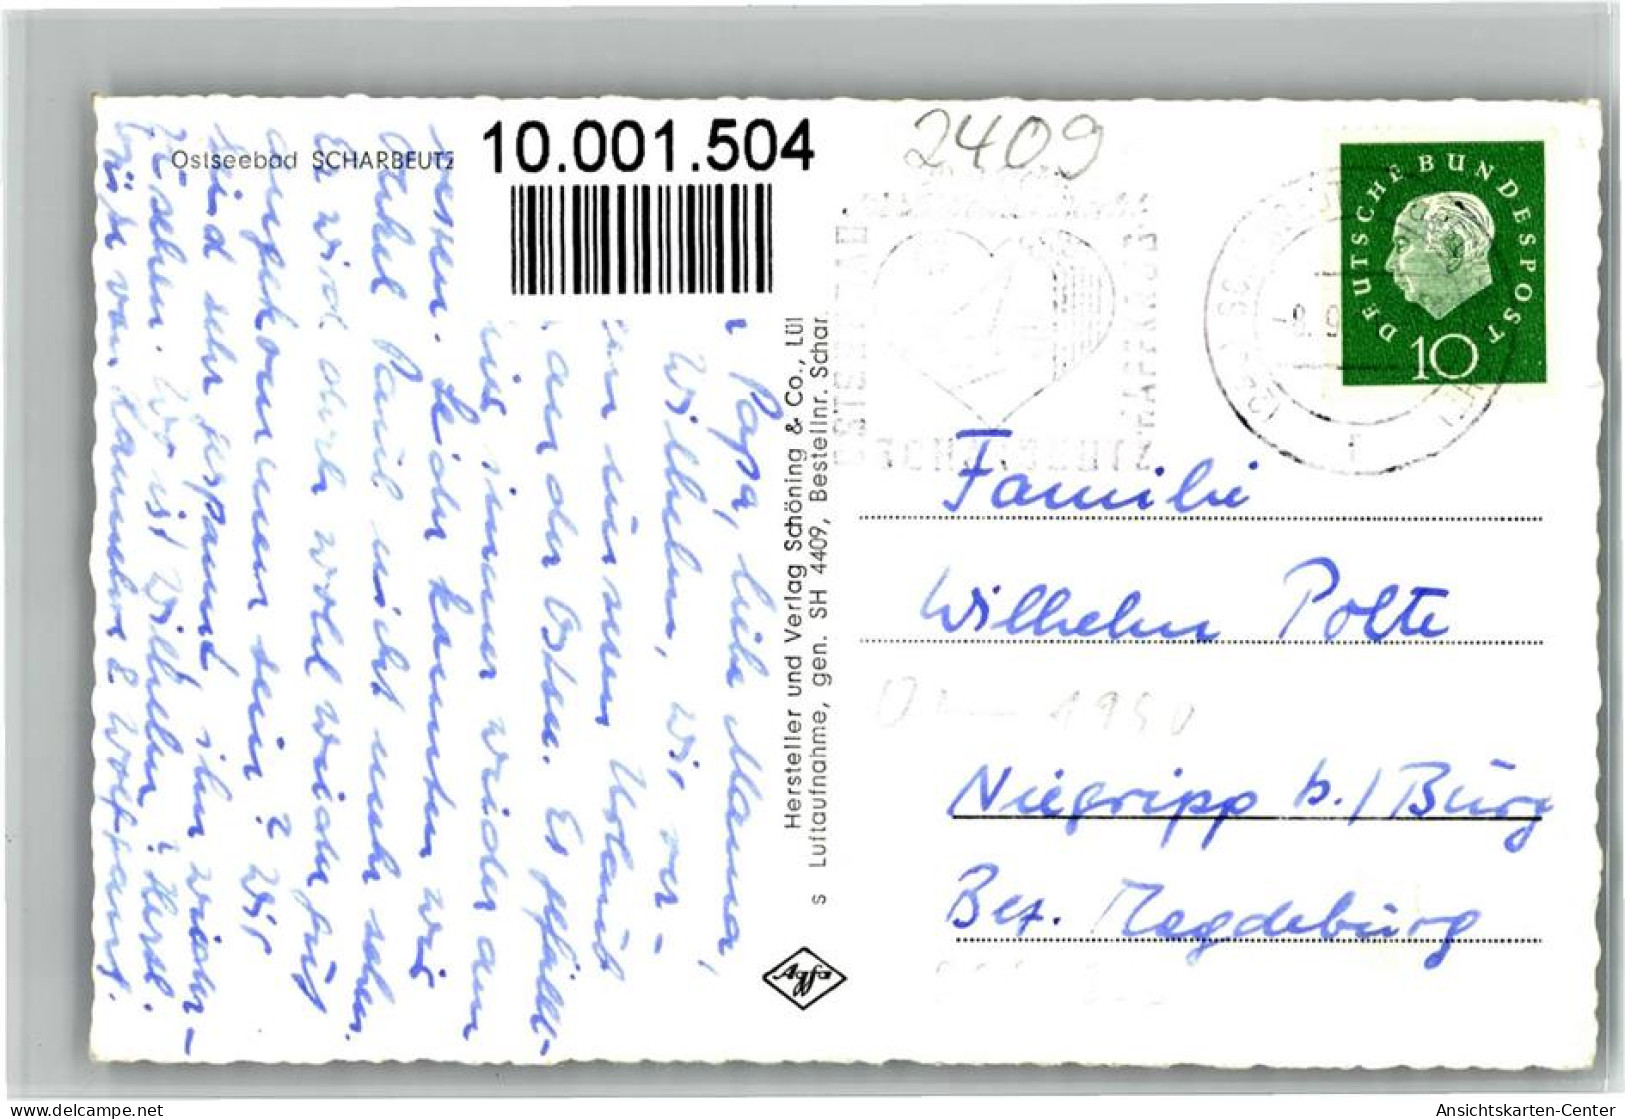 10001504 - Scharbeutz - Scharbeutz